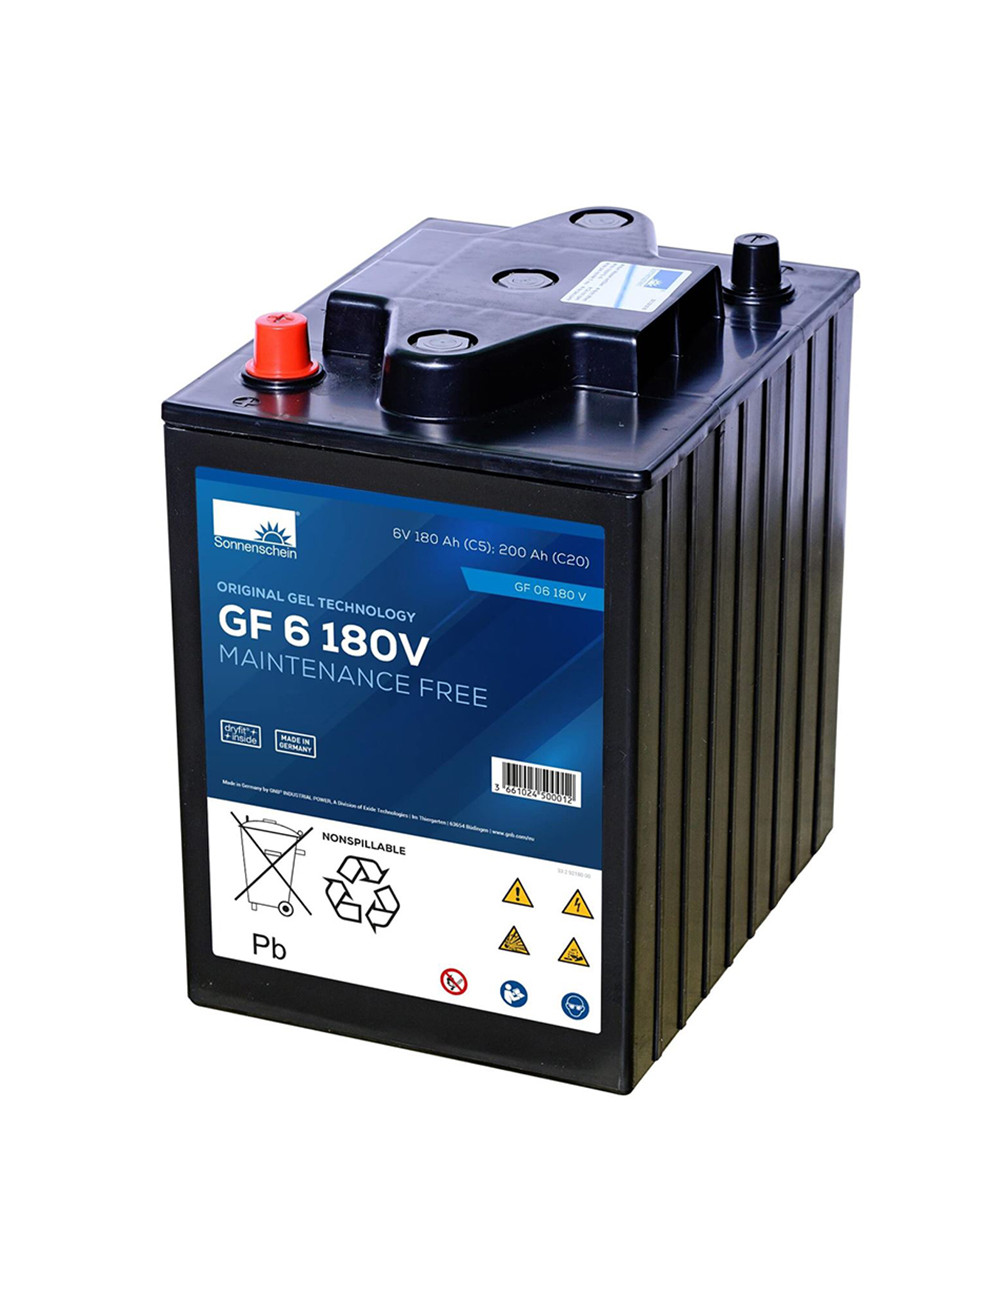 GF 6 180V batería gel 6V 180Ah C5 Sonneschein Dryfit - GF06180V -  - 3661024500012 - 1